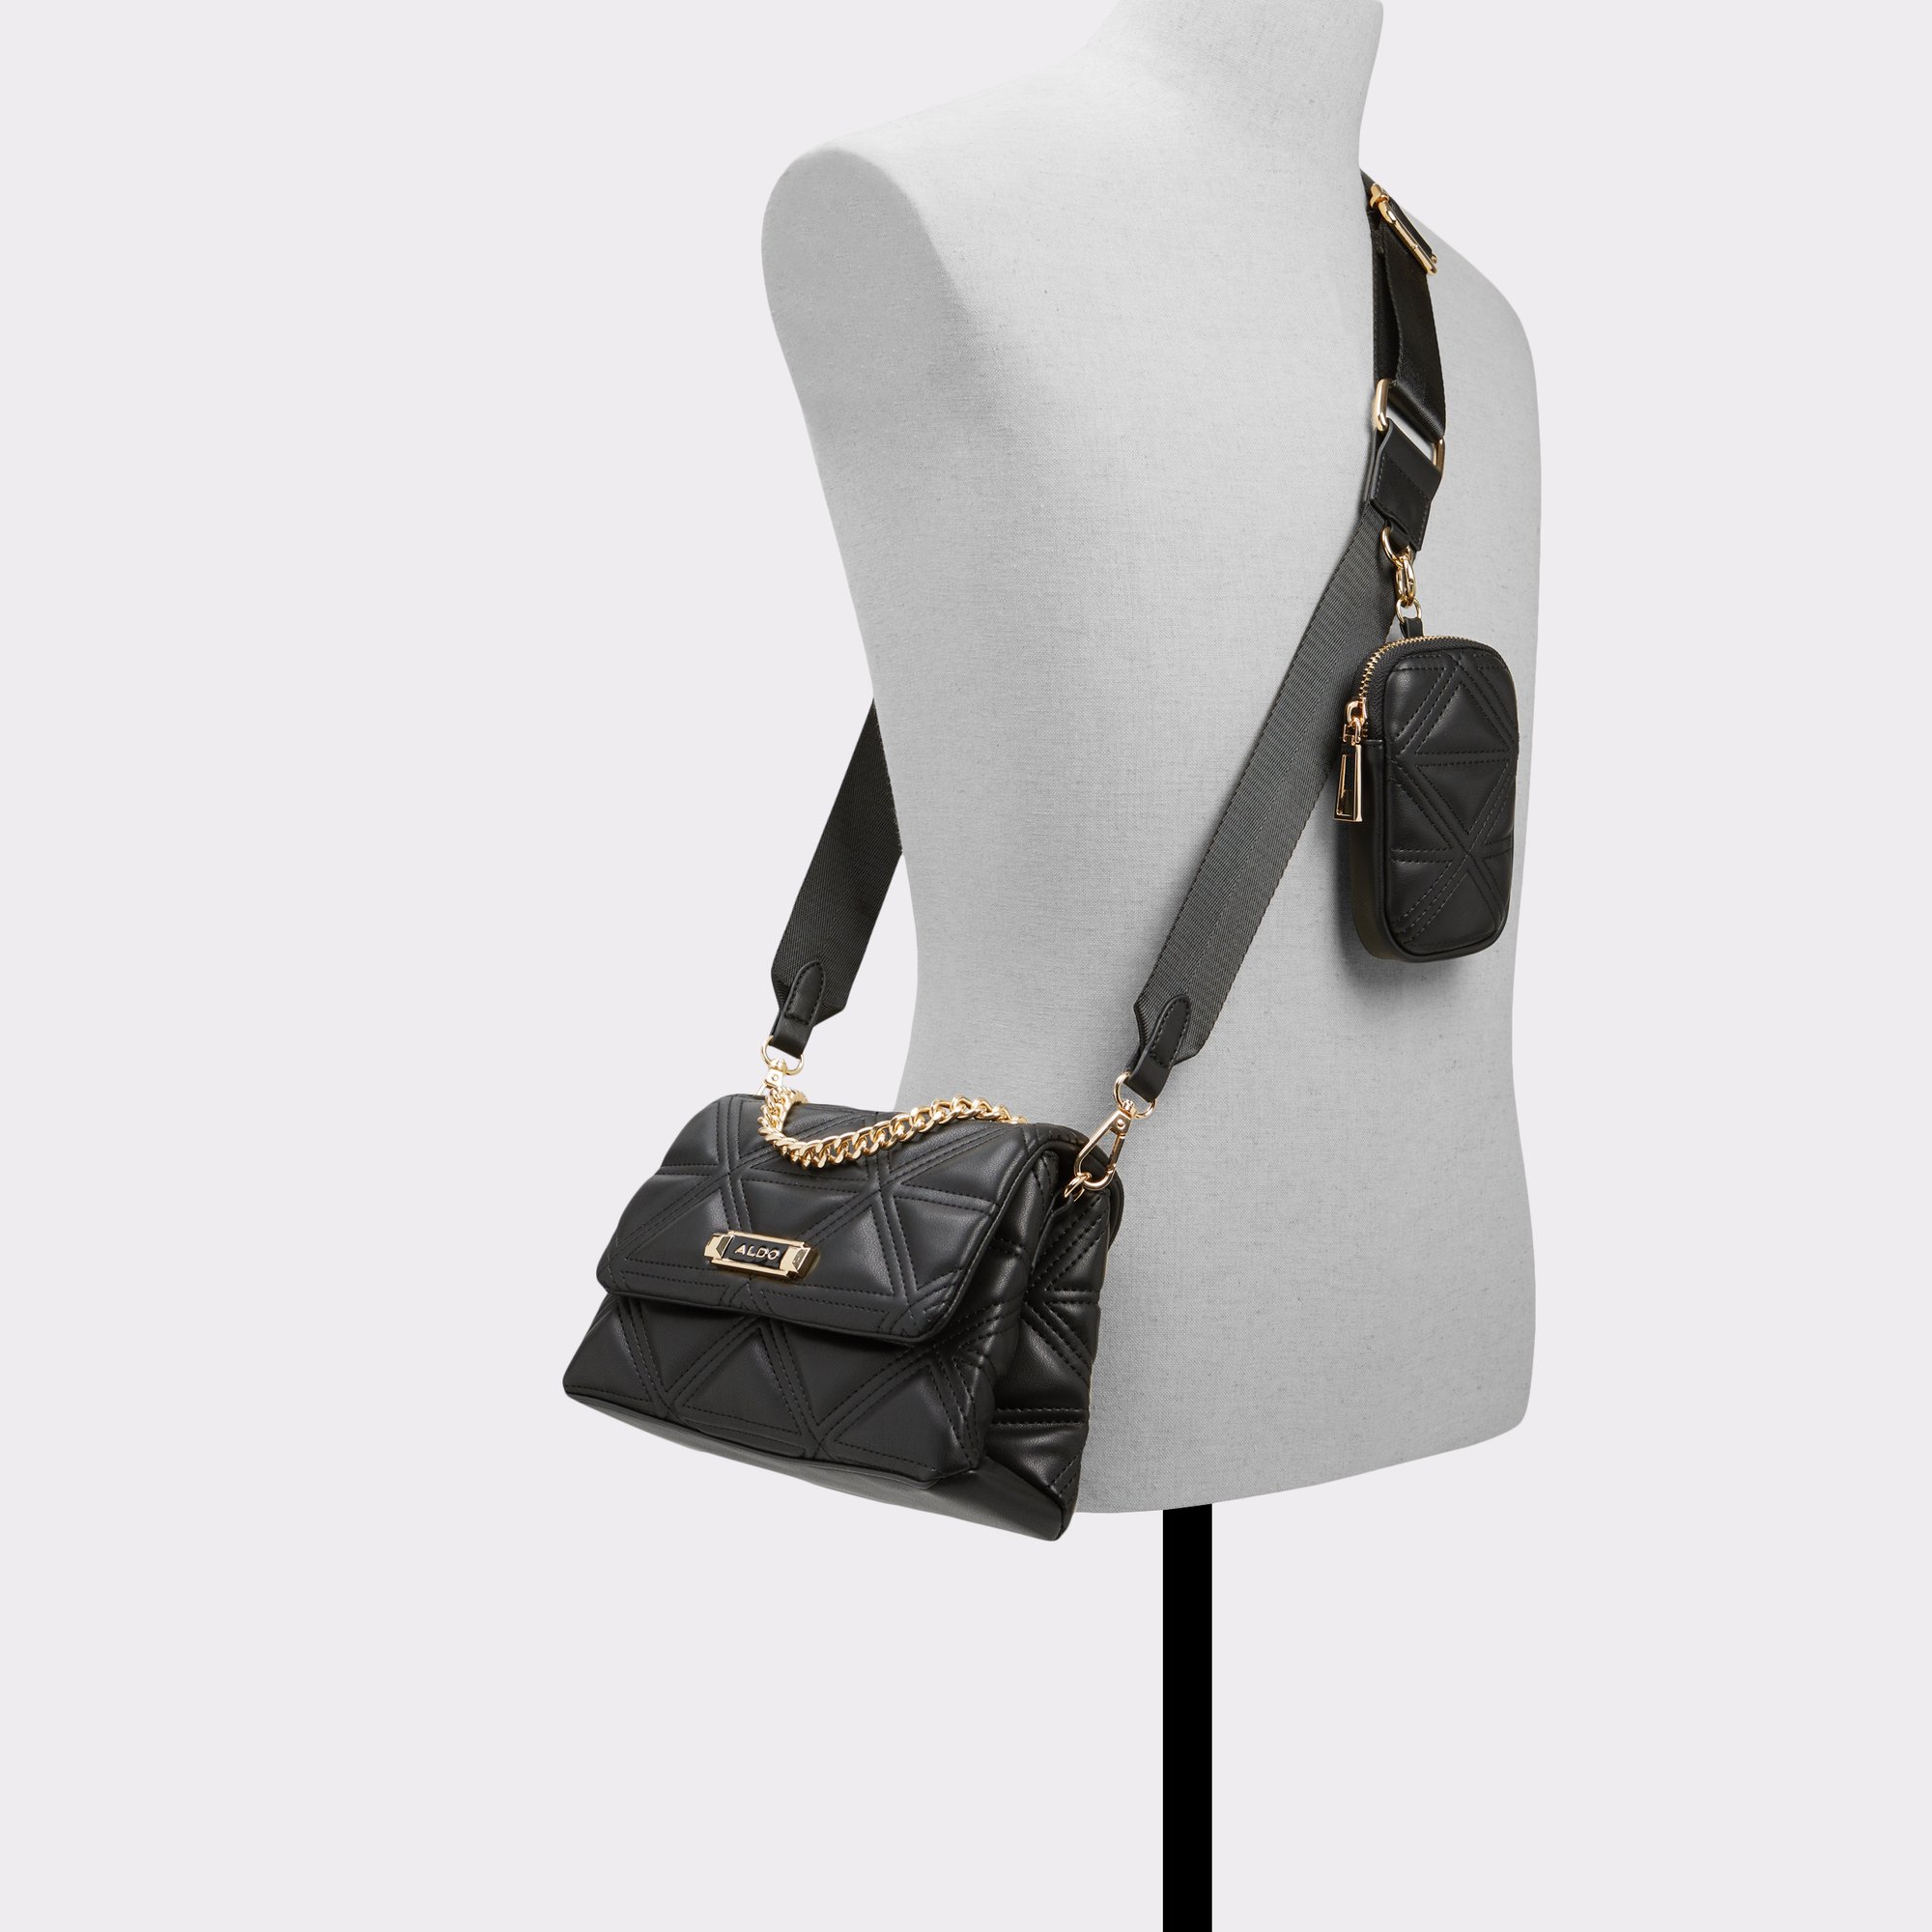 Buy Aldo ESSENCE Women Black Handbags at